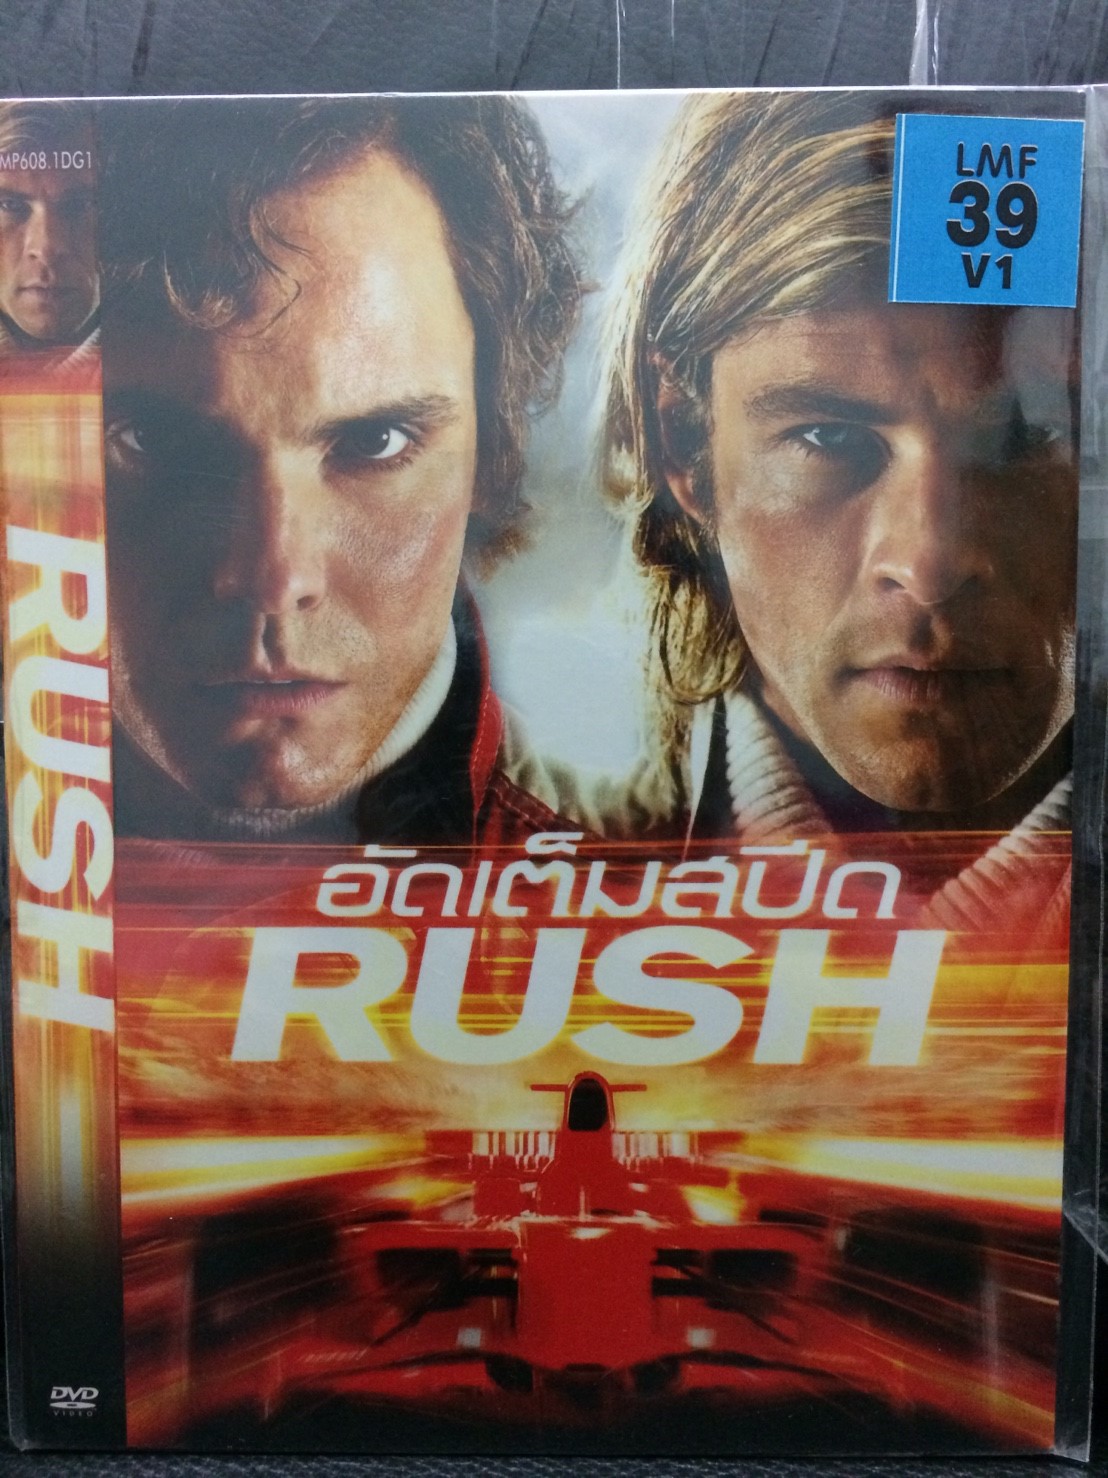 DVDหนัง RUSH อัดเต็มสปีด (SBYDVDซอง3389-RUSHอัดเต็มสปีด) 2ภาษา ไทย-อังกฤษ หนัง หนังซอง ราคาถูก ดีวีดี แผ่นหนัง ดูหนัง หนังดี มาสเตอร์แท้ รวมหนัง STARMART